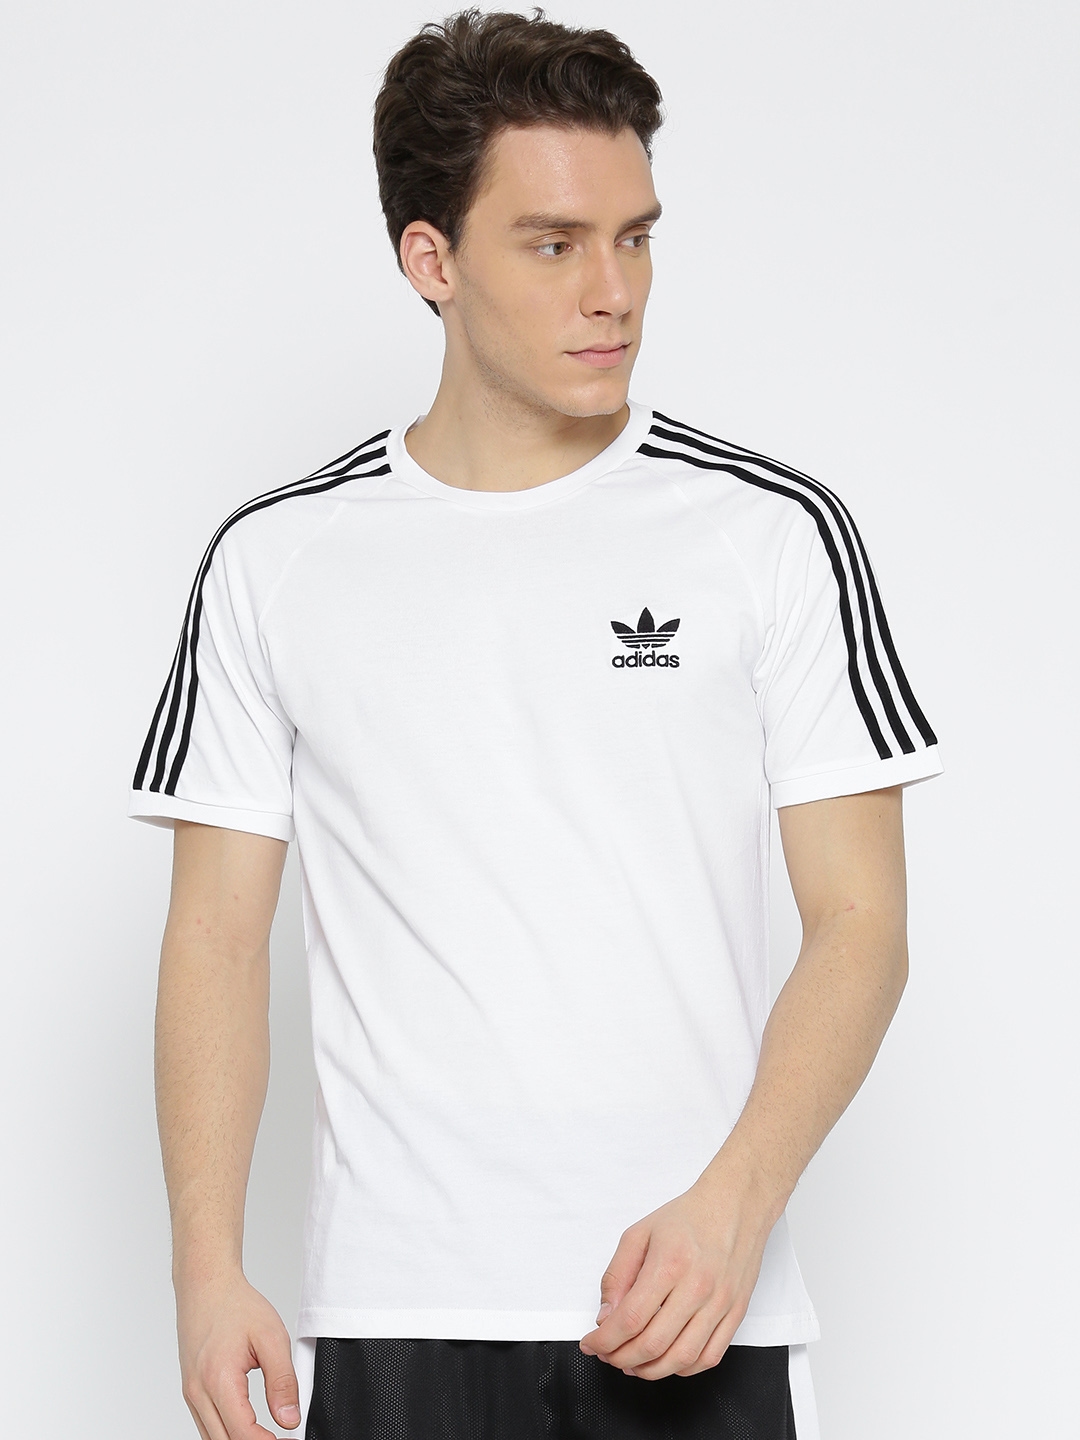 Orientar Favor Edad adulta Buy ADIDAS Originals Men White 3 Stripes Solid Round Neck T Shirt - Tshirts  for Men 2450823 | Myntra